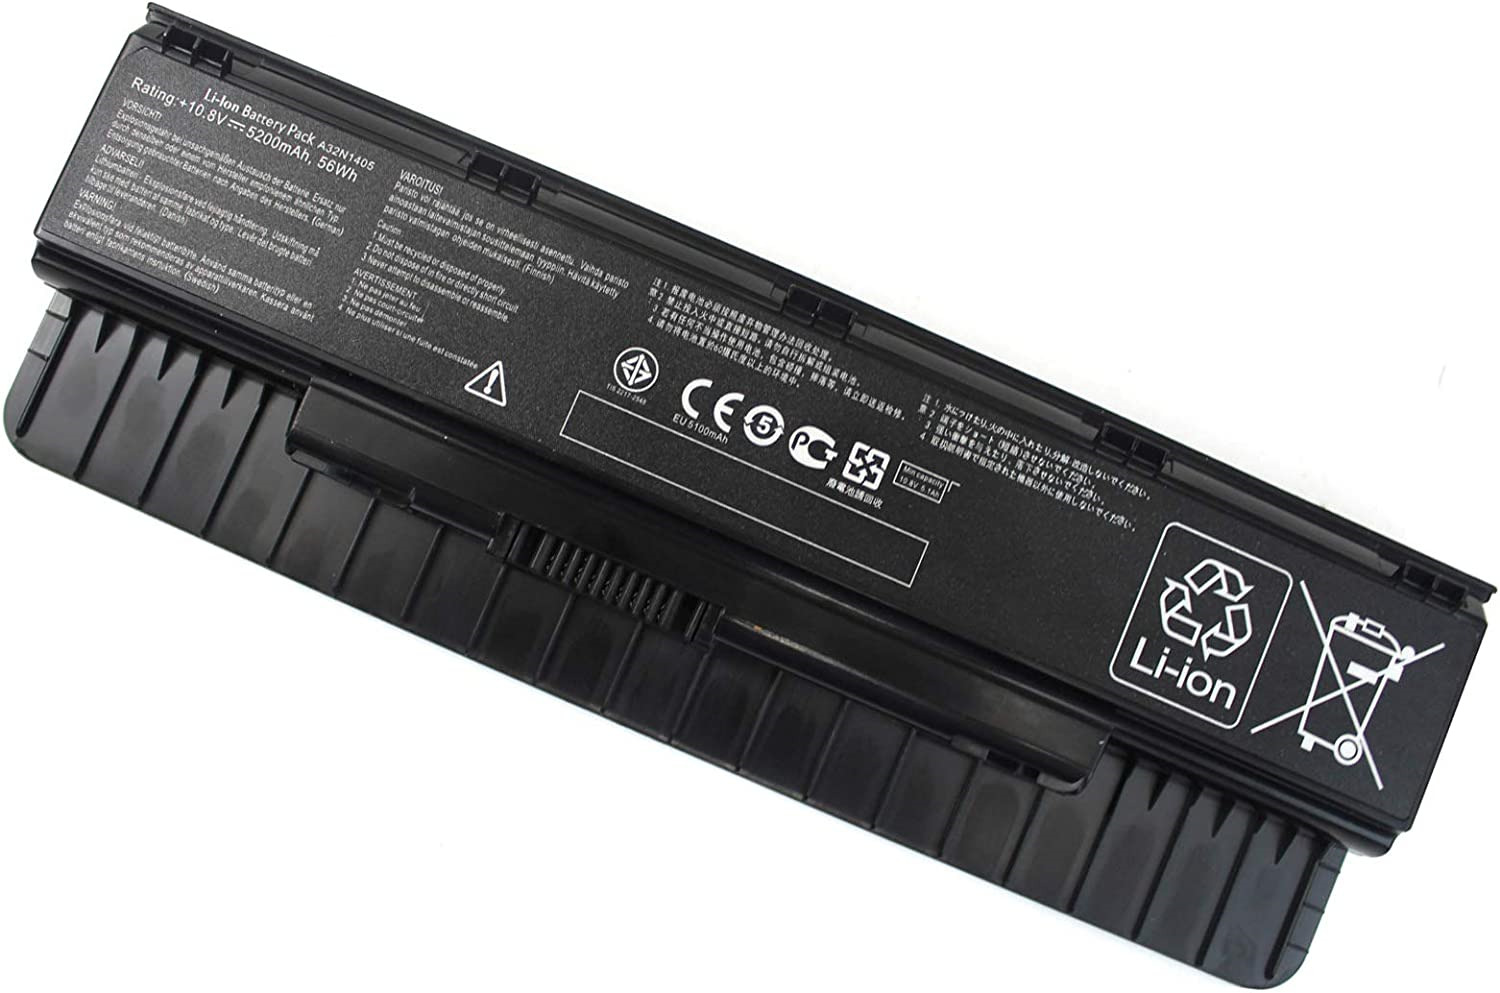 DMKAOLLK A32N1405 A32LI9H Laptop Battery for Asus GL551 GL551J GL551JW G551 G771